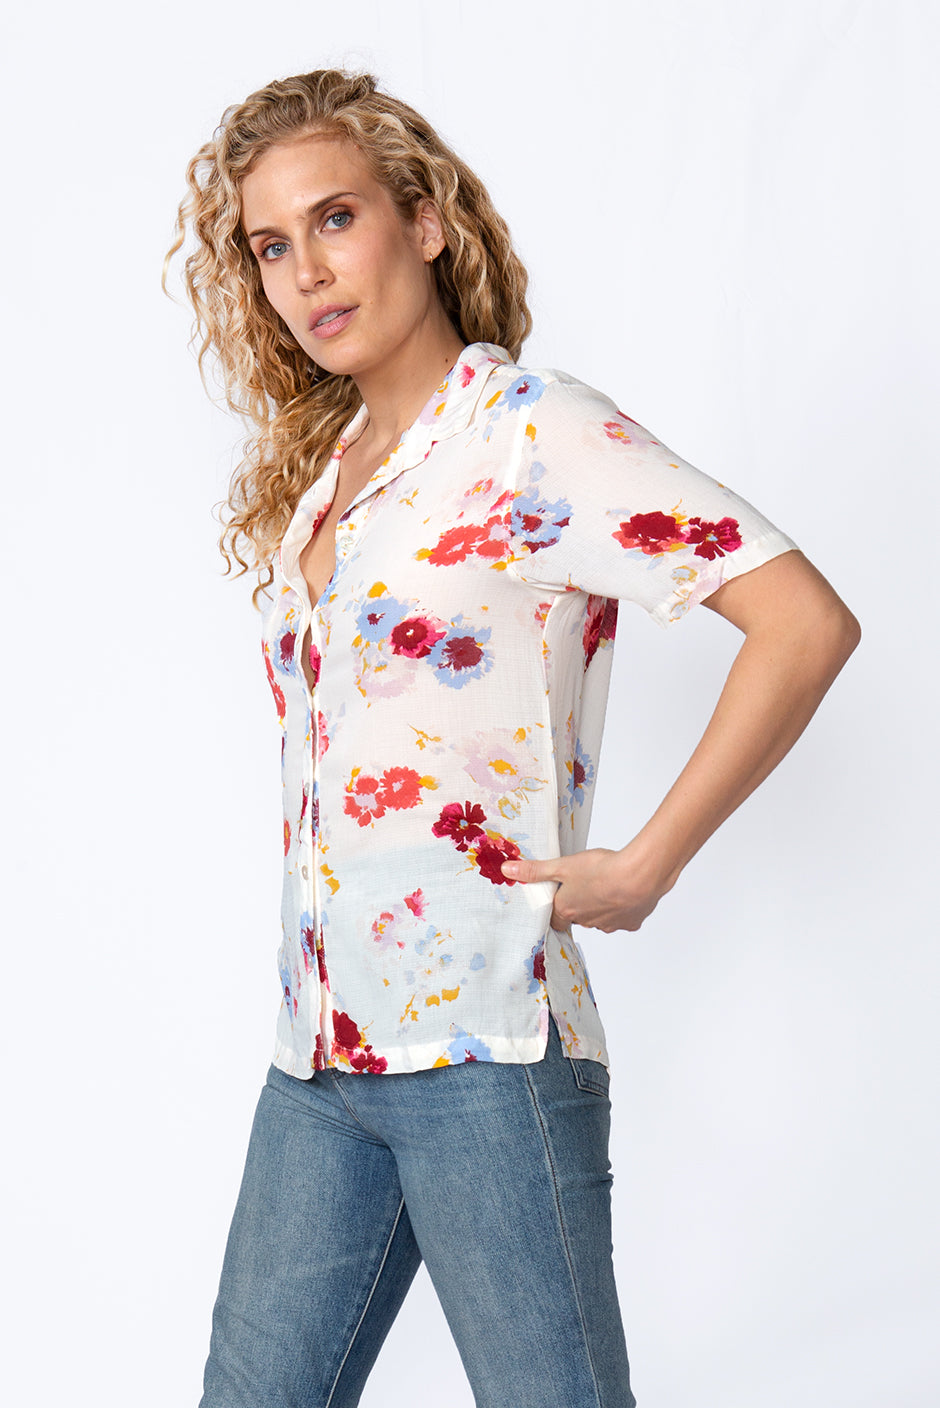 Shop the Kaia Shirt: Ethical Floral Print Women's Button-up Top ...